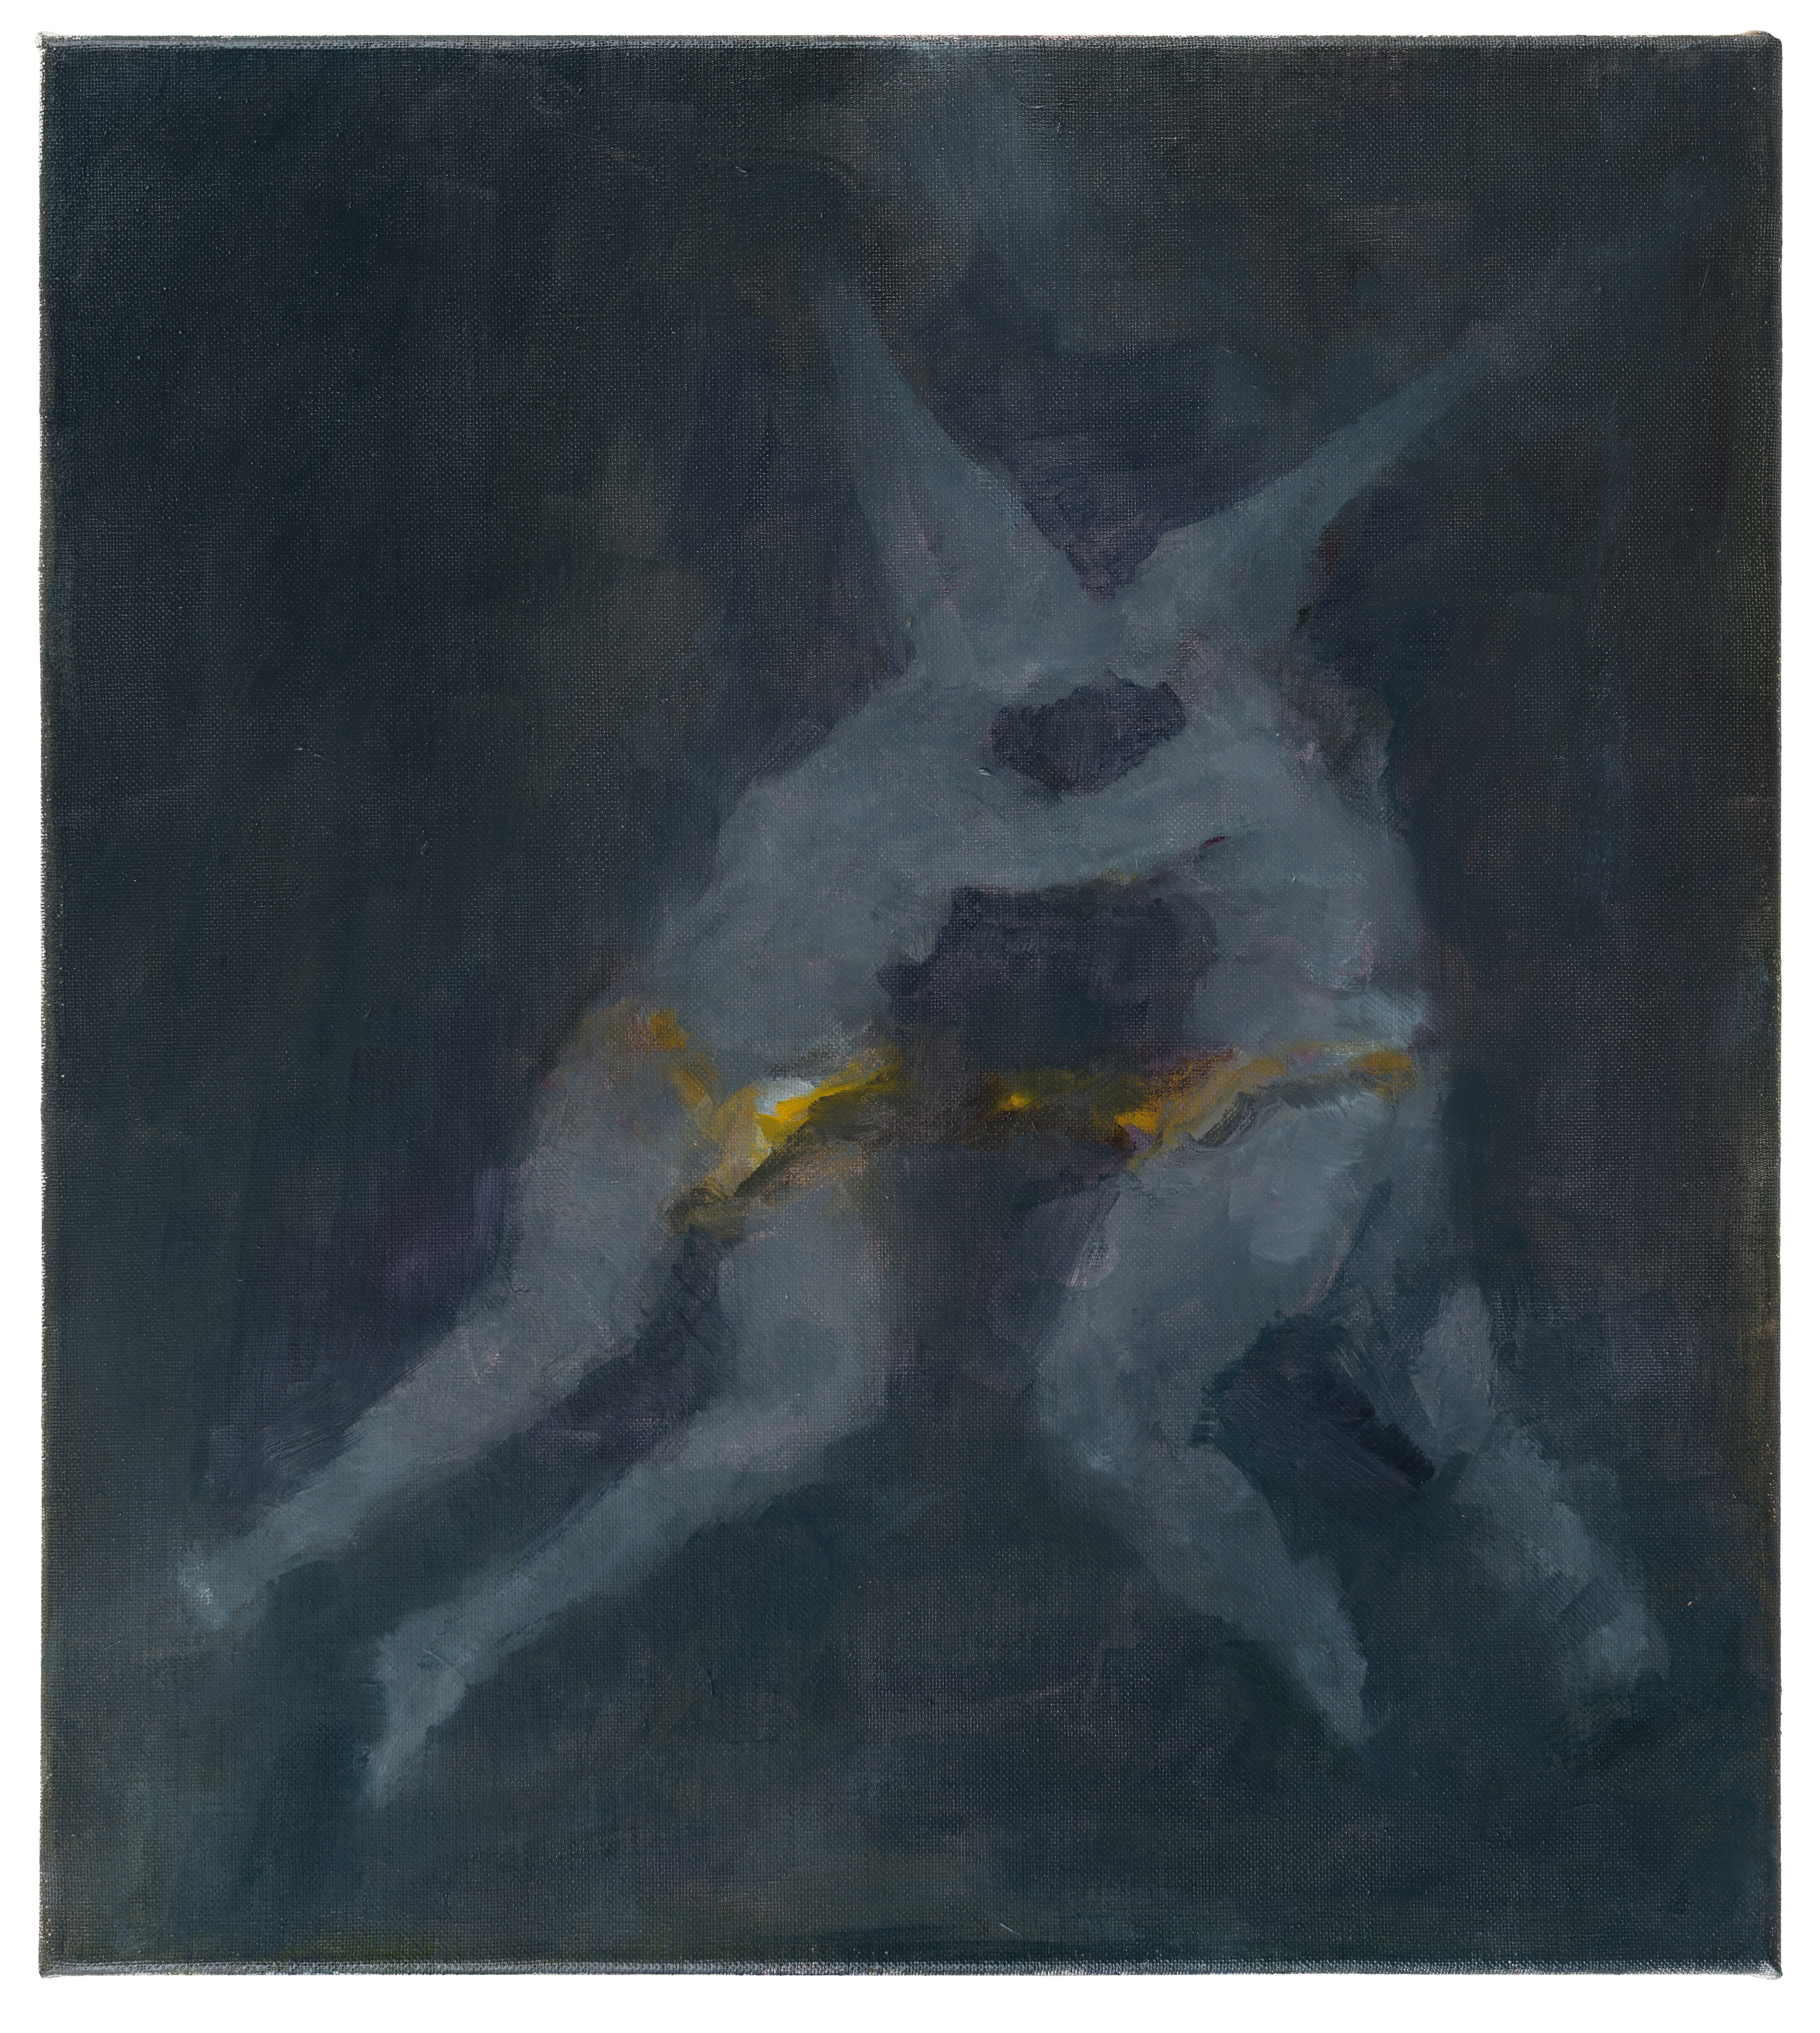 Galerie Barbara Thumm \ Valérie Favre: Ghost (nach Goyas Hexenflug) (VFa-15-014) \ Ghost (nach Goyas Hexenflug) (2015)